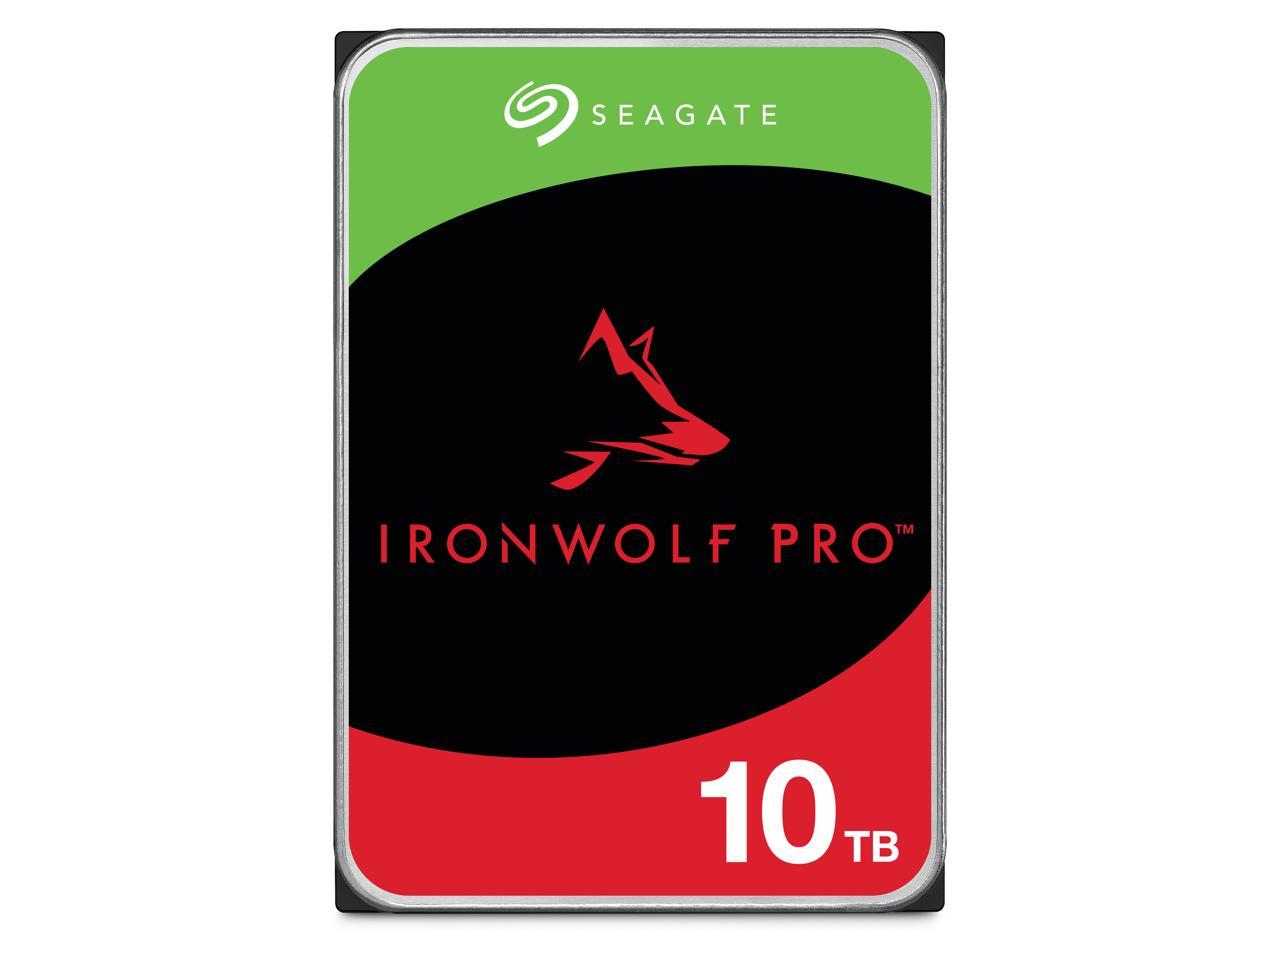 Seagate IronWolf Pro ST10000NT001 10TB 7200 RPM 256MB Cache SATA 6.0Gb/s 3.5" Internal Hard Drive